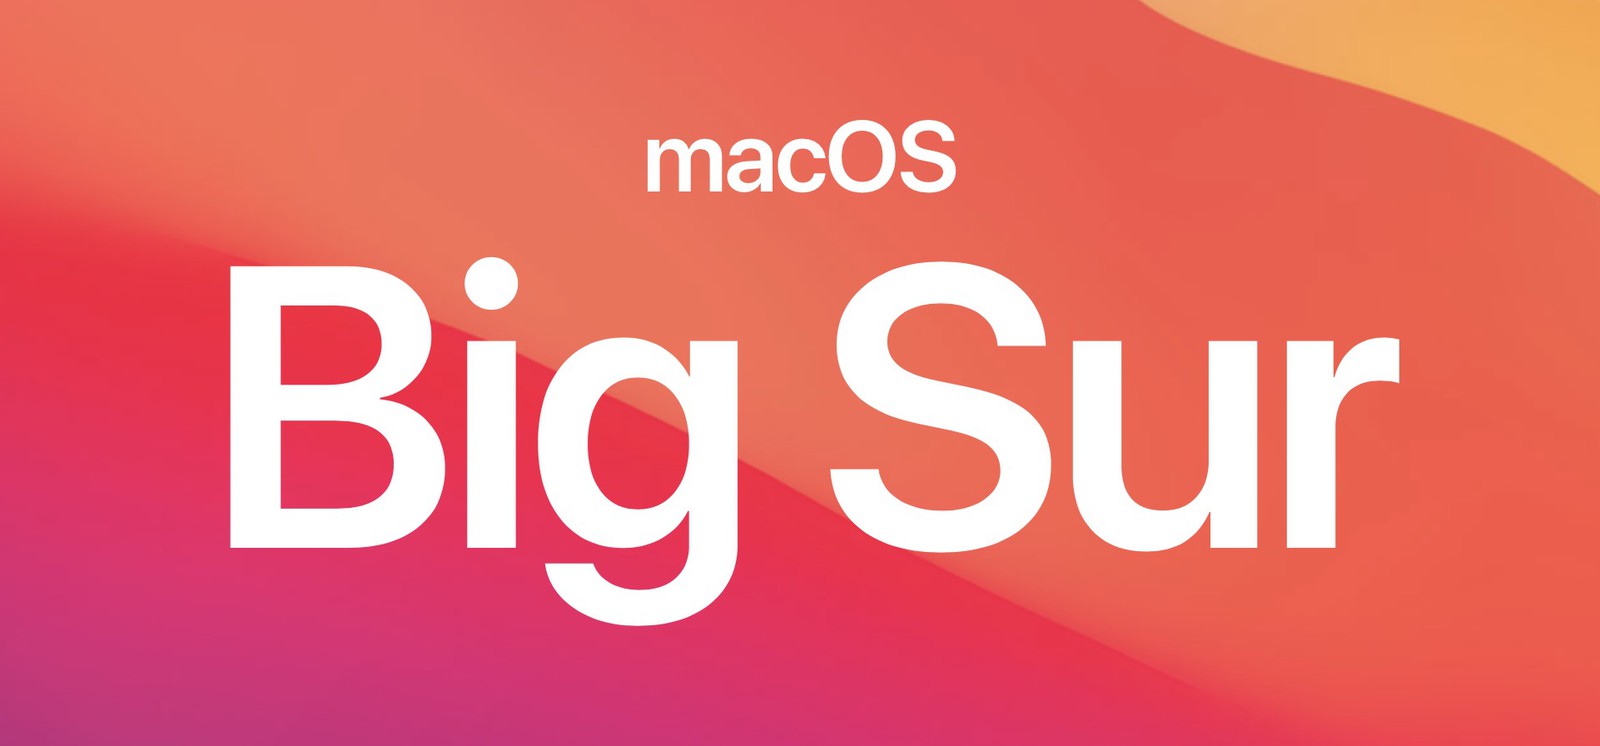 macOS Big Sur正式版将于11月13日推送